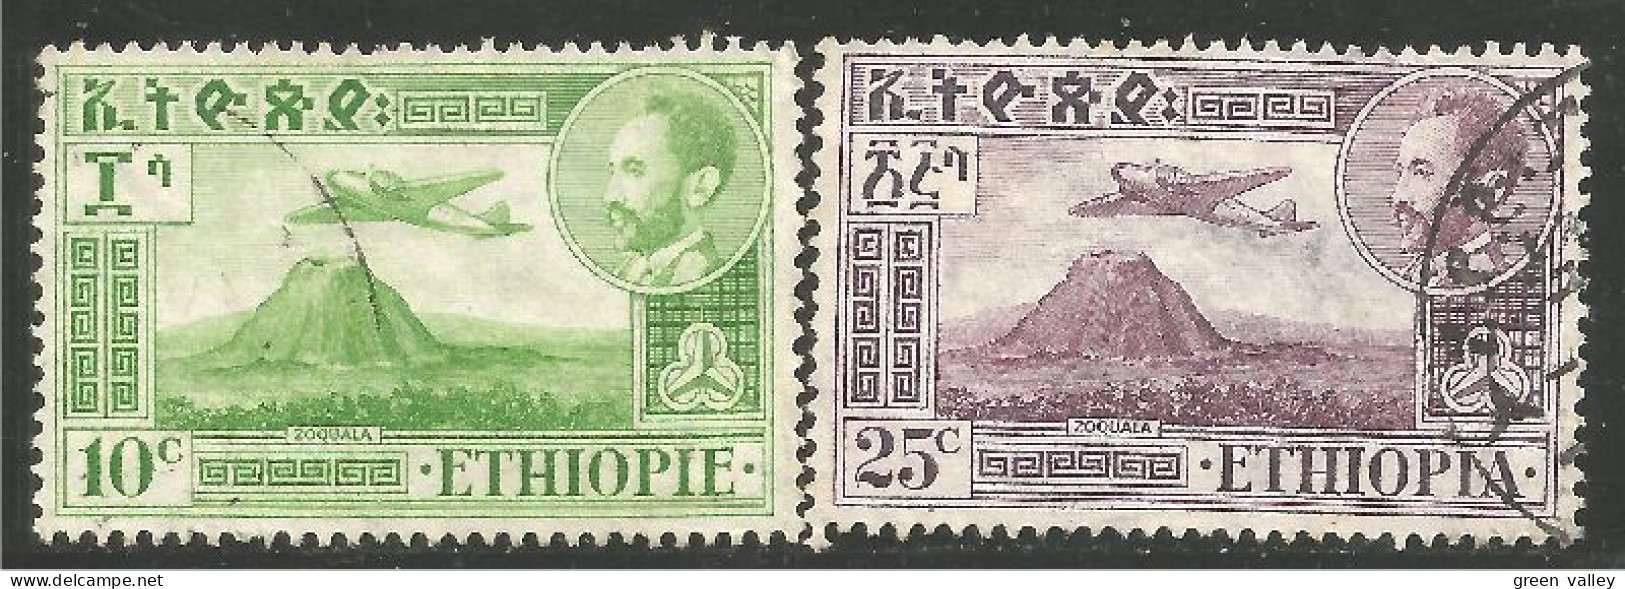 324 Ethiopie 1947 Volcan Zoquala Volcano (ETH-289) - Volcans